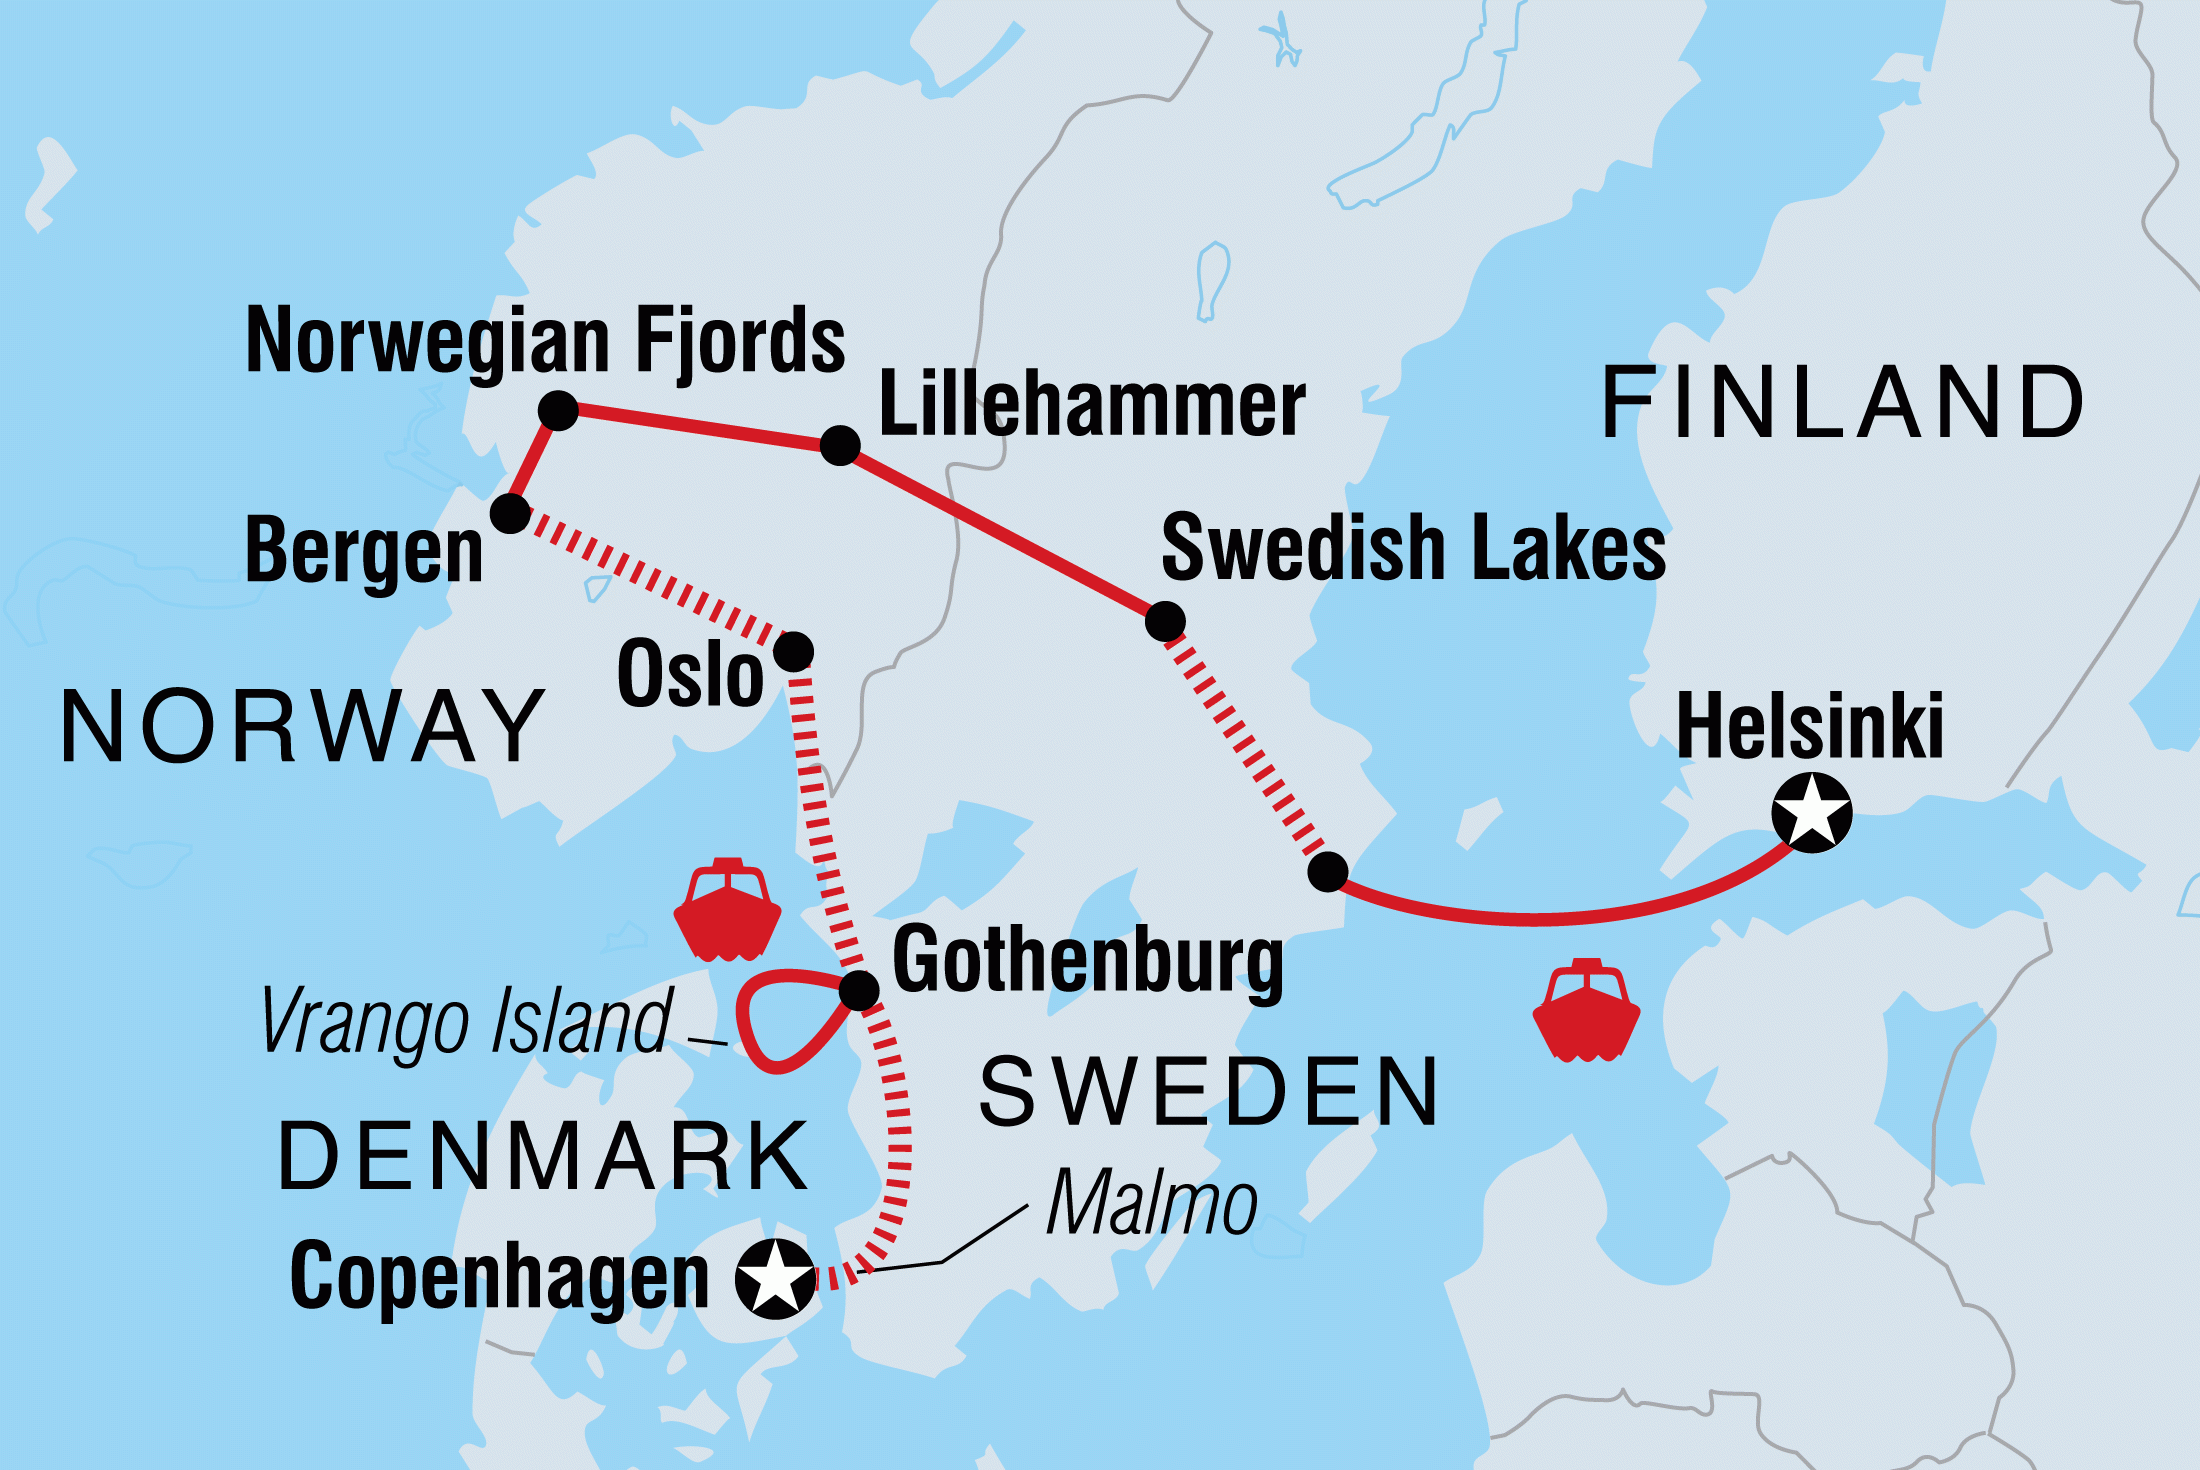 scandinavia tour itinerary